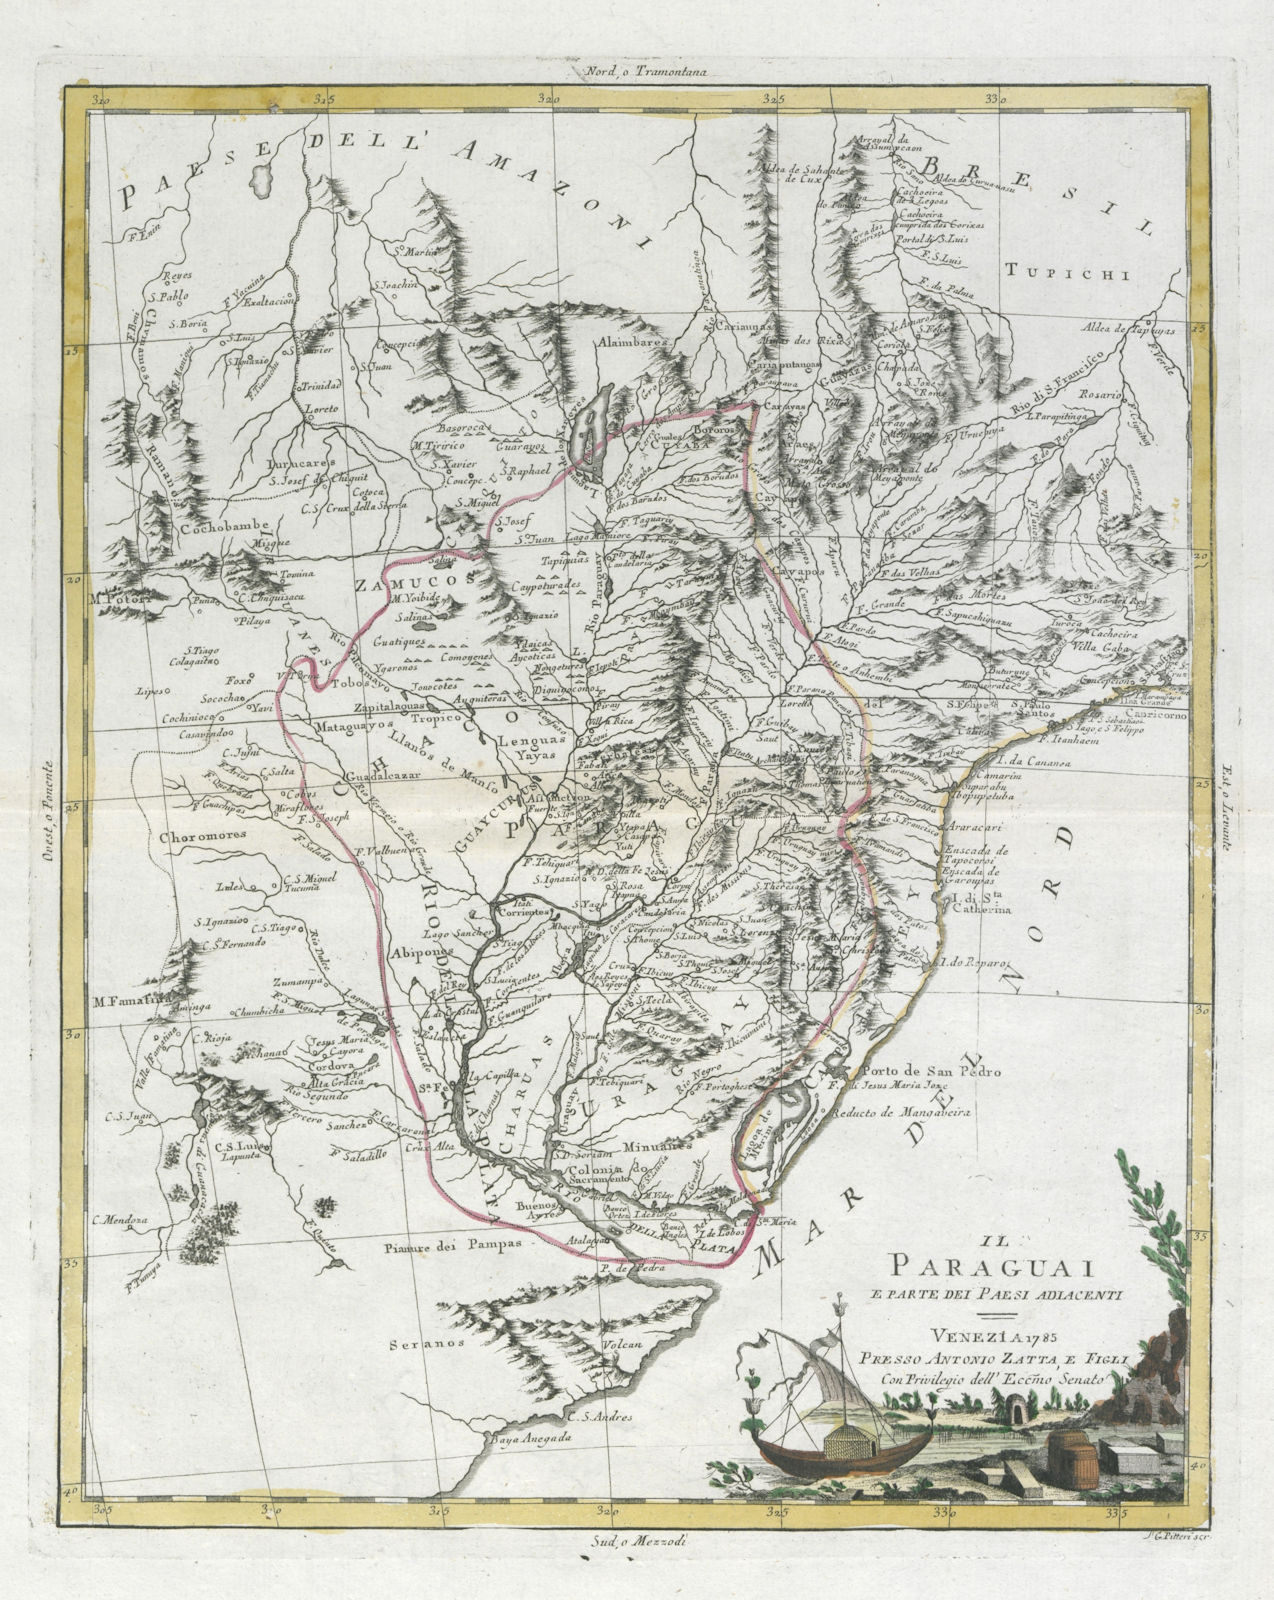 "Il Paraguai e parte dei paesi adiacenti" Uruguay Paraguay Brazil ZATTA 1785 map